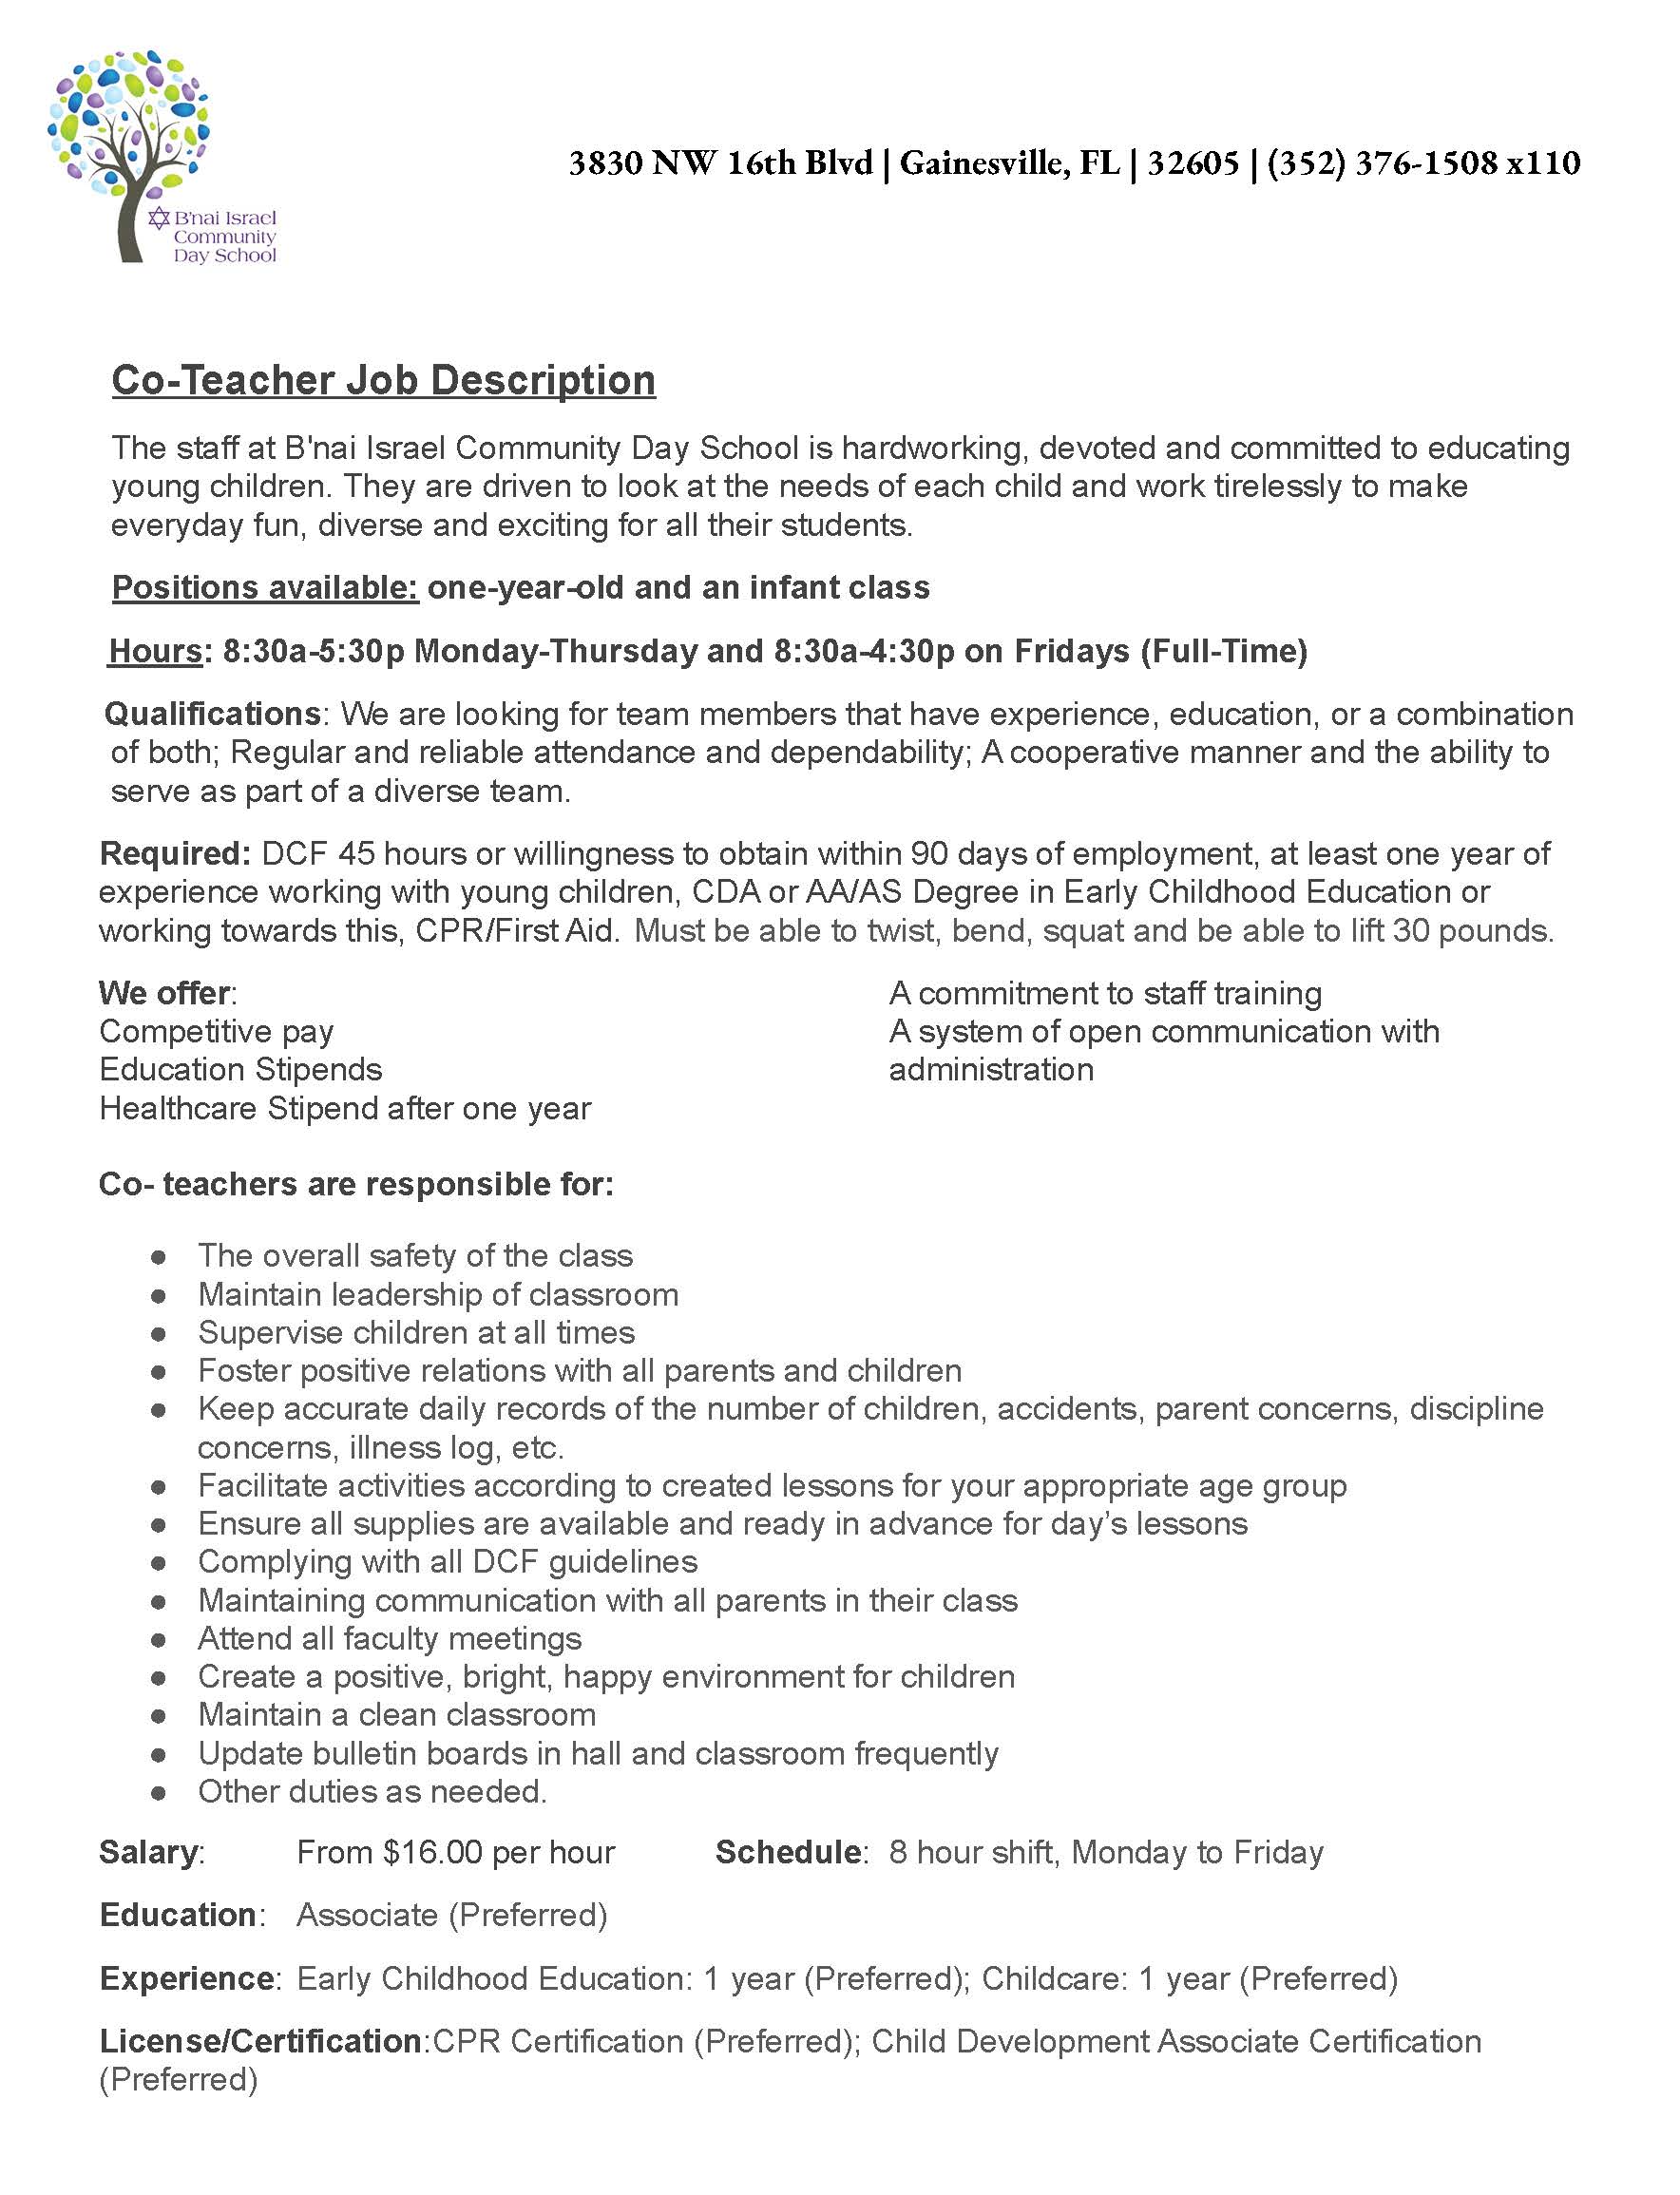 Job listing flyer - Page 2